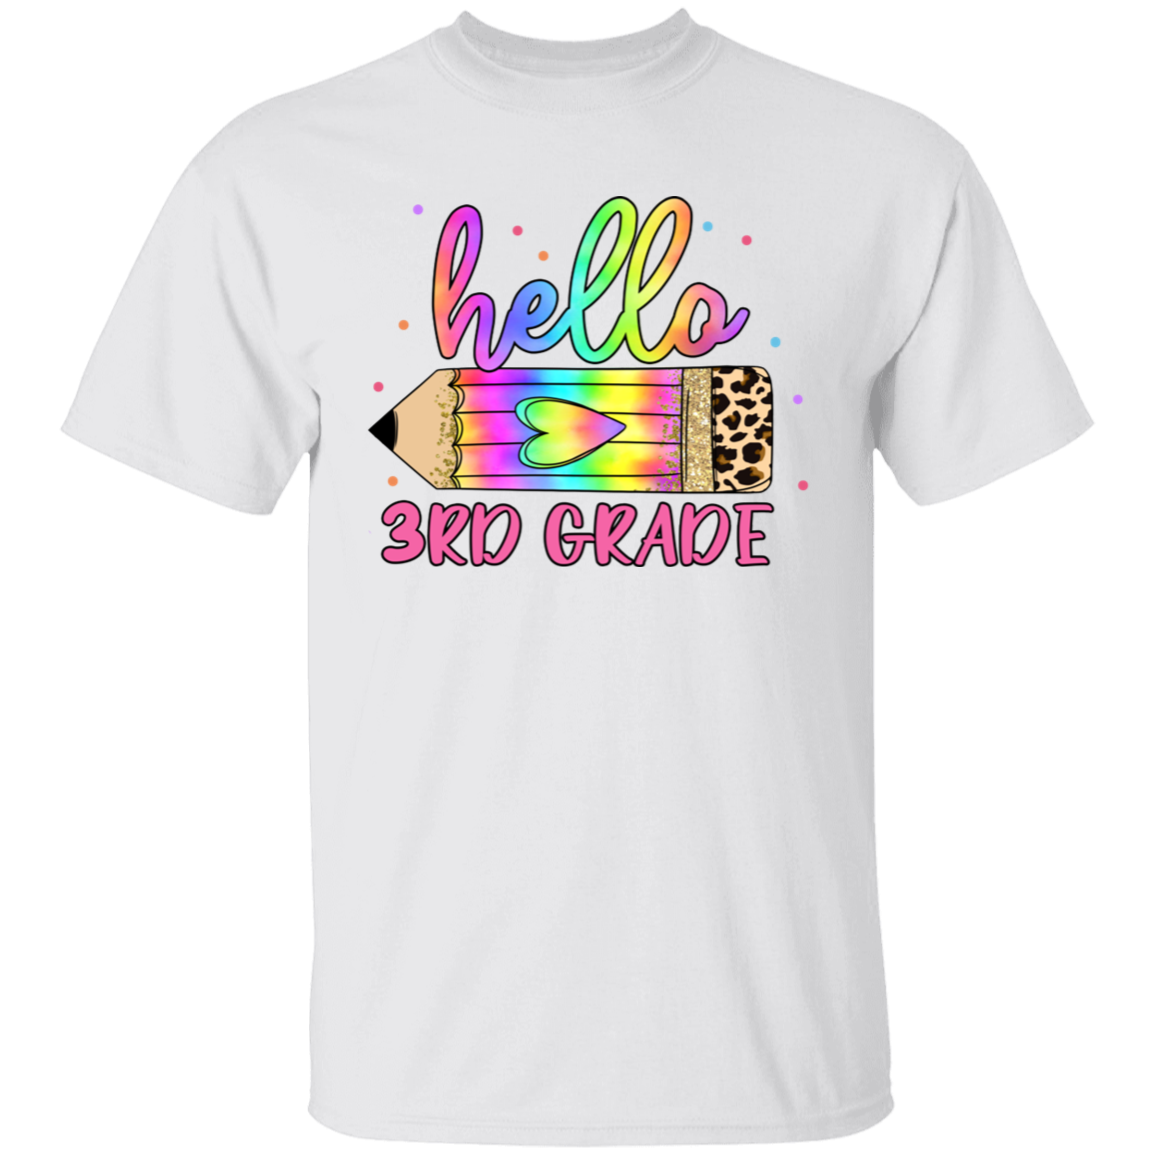 3rd Grade Youth 5.3 oz 100% Cotton T-Shirt